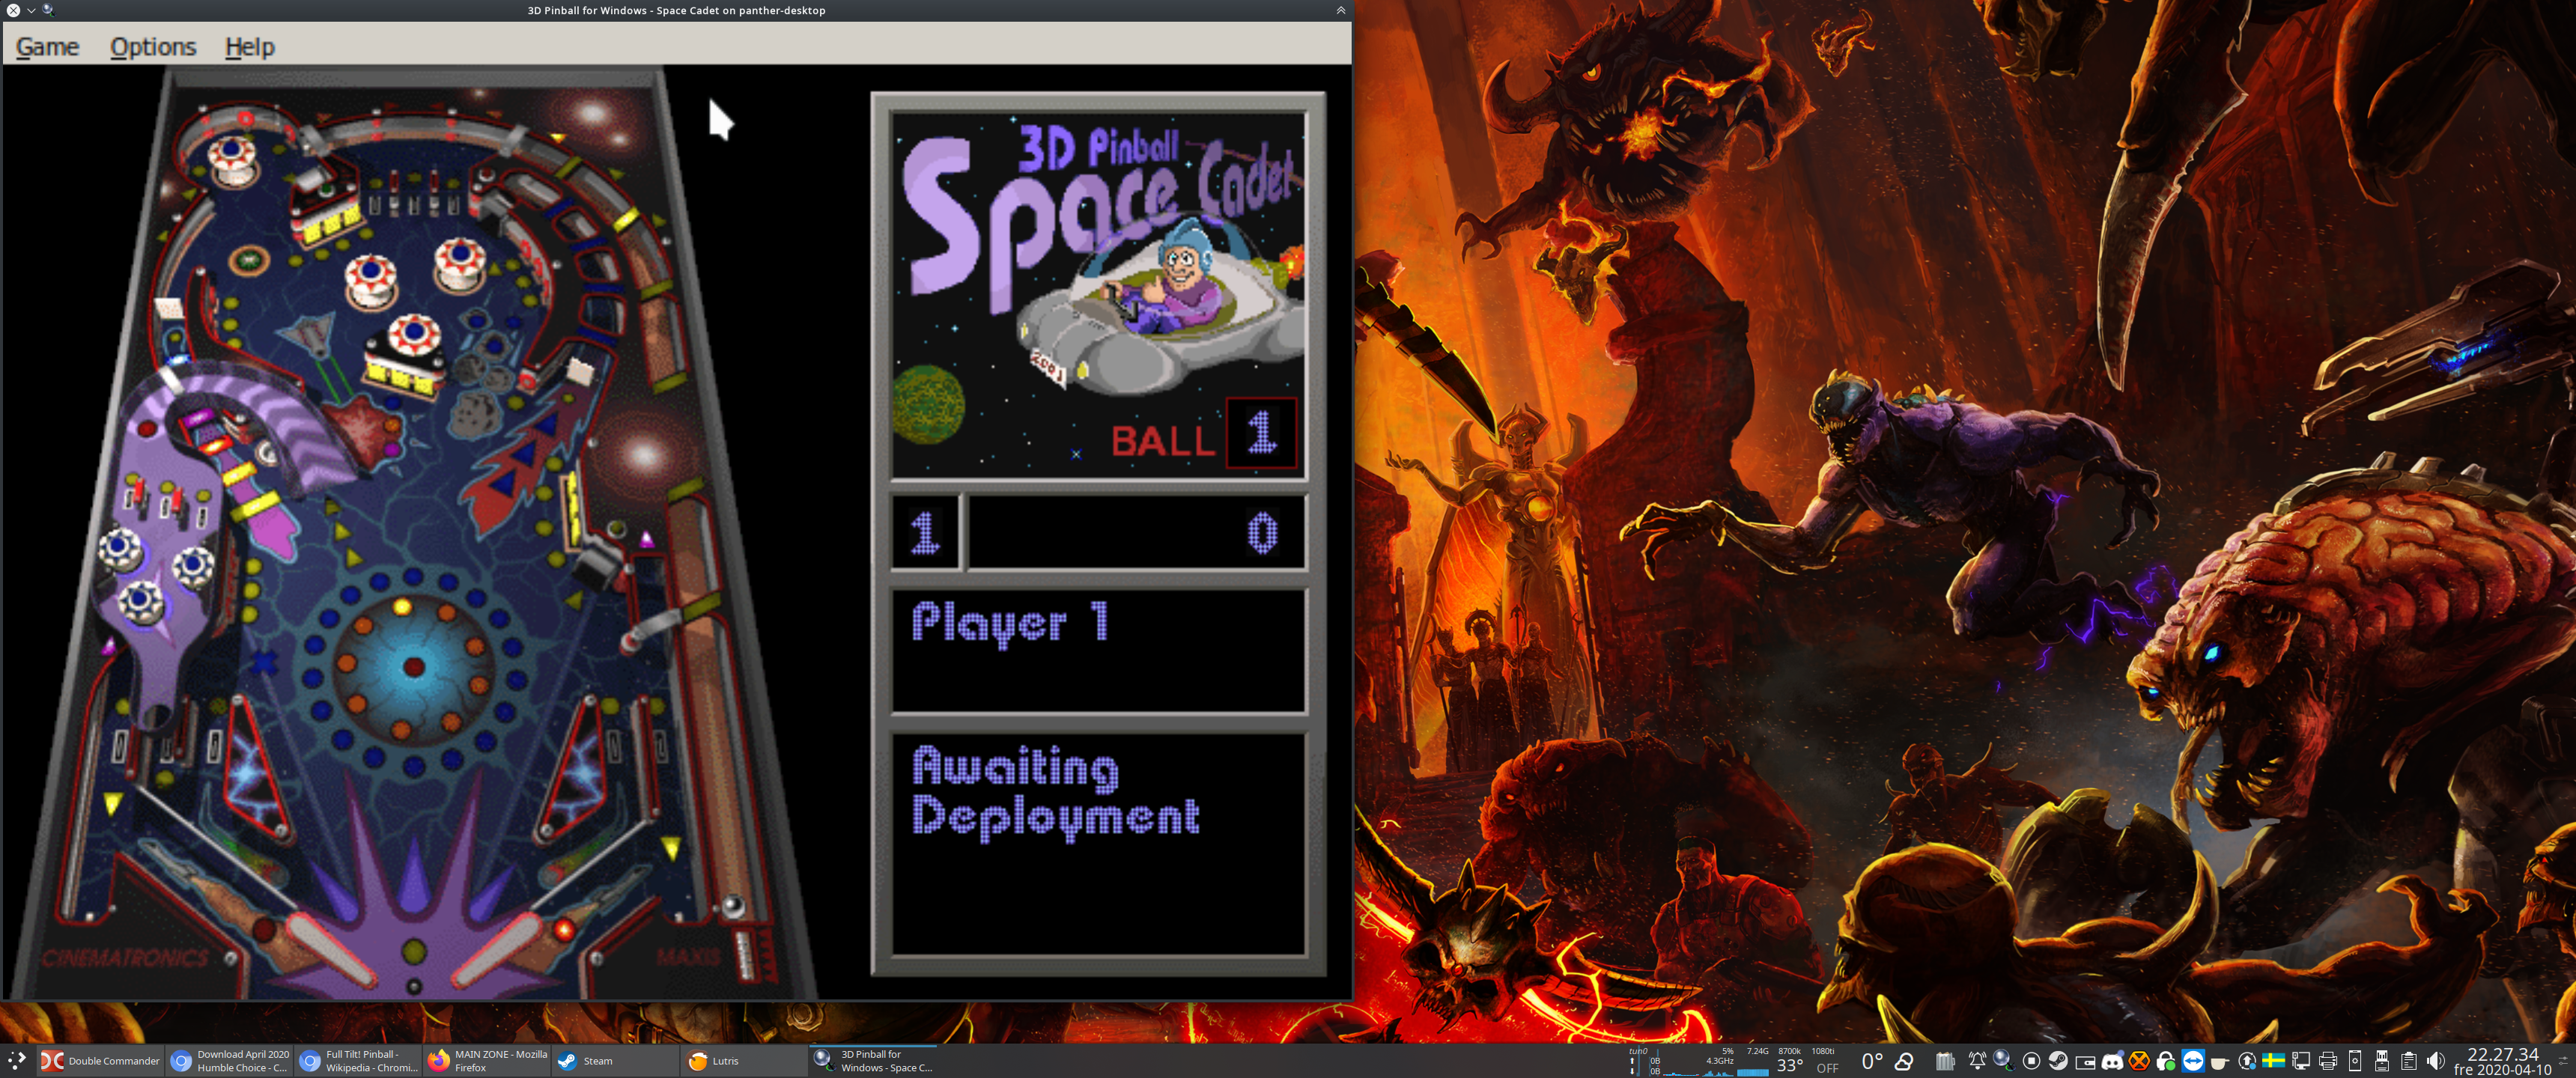 3d pinball space cadet download fullscreen